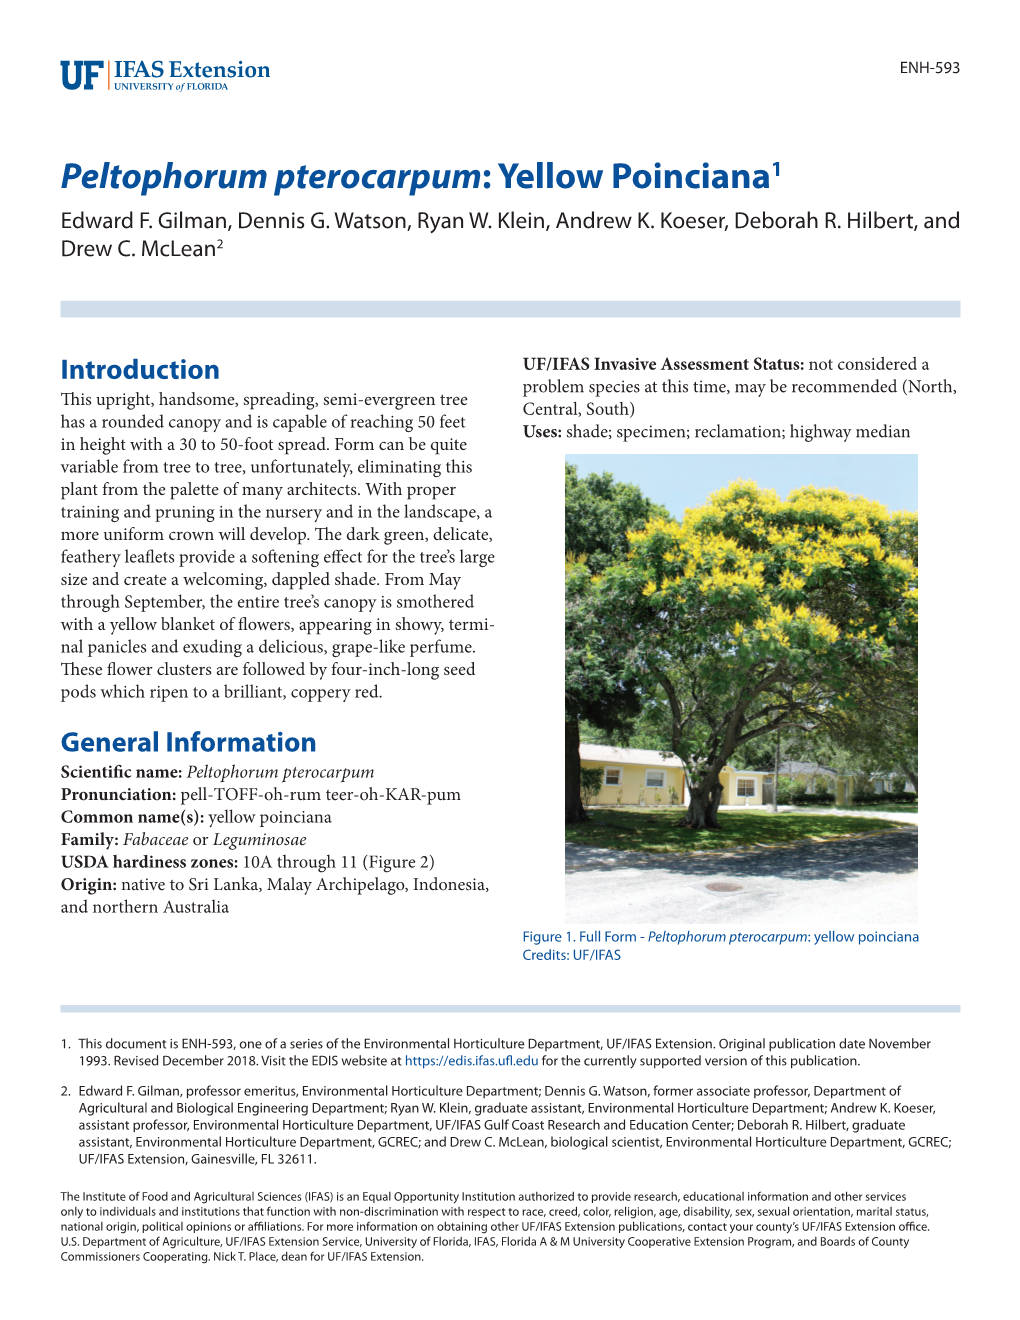 Peltophorum Pterocarpum: Yellow Poinciana1 Edward F